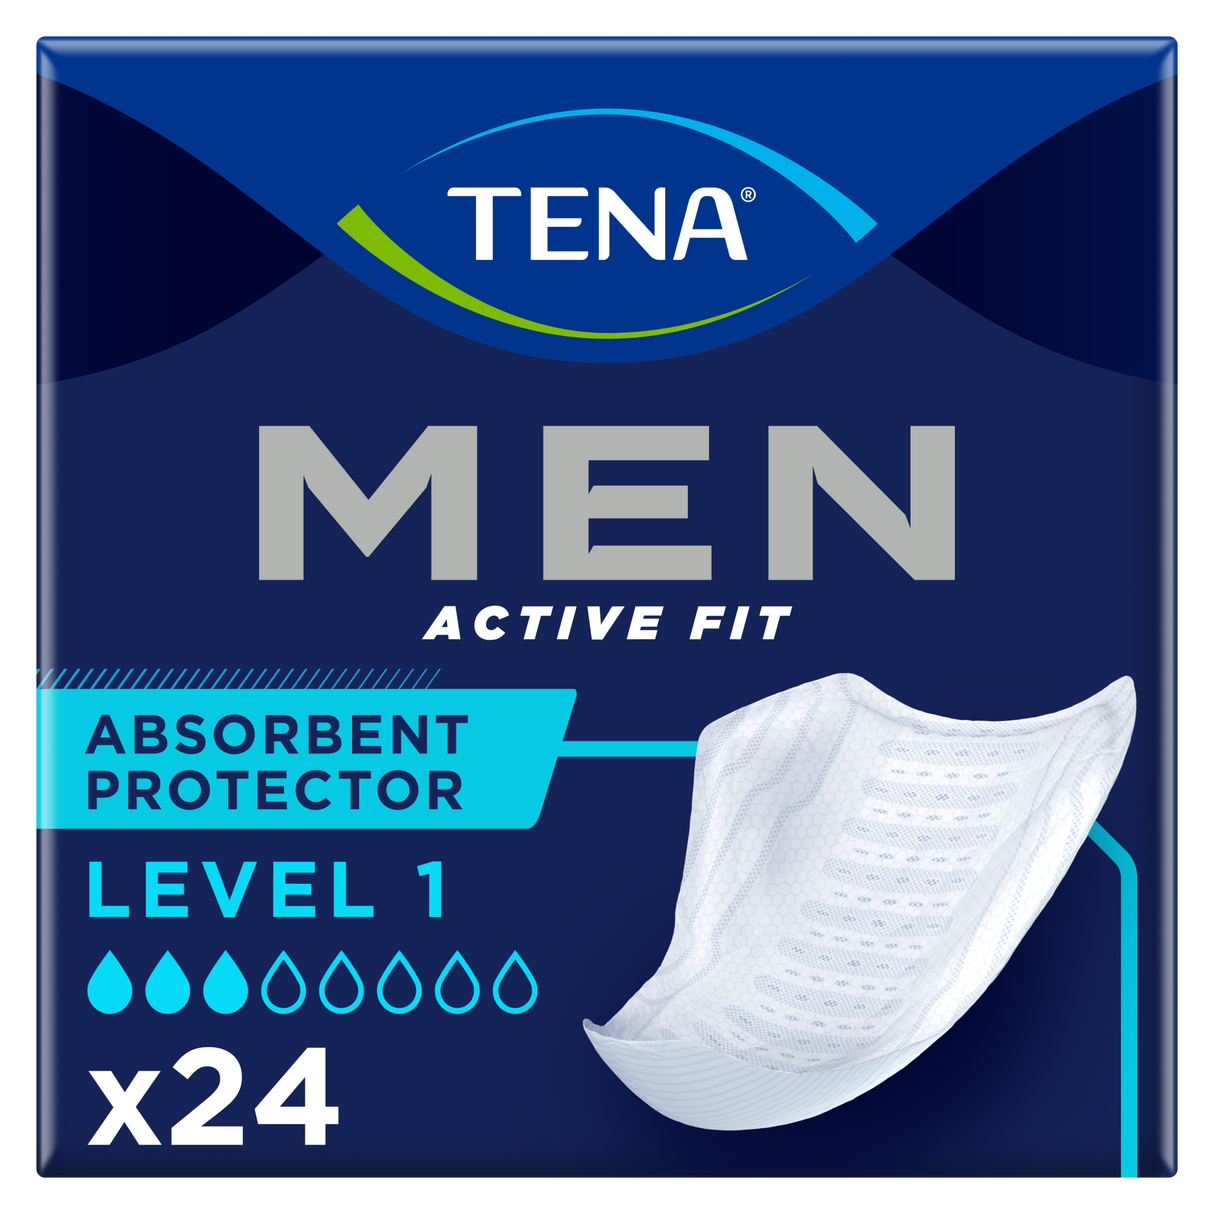 TENA Men niveau 1 - protections homme - paquet de 24